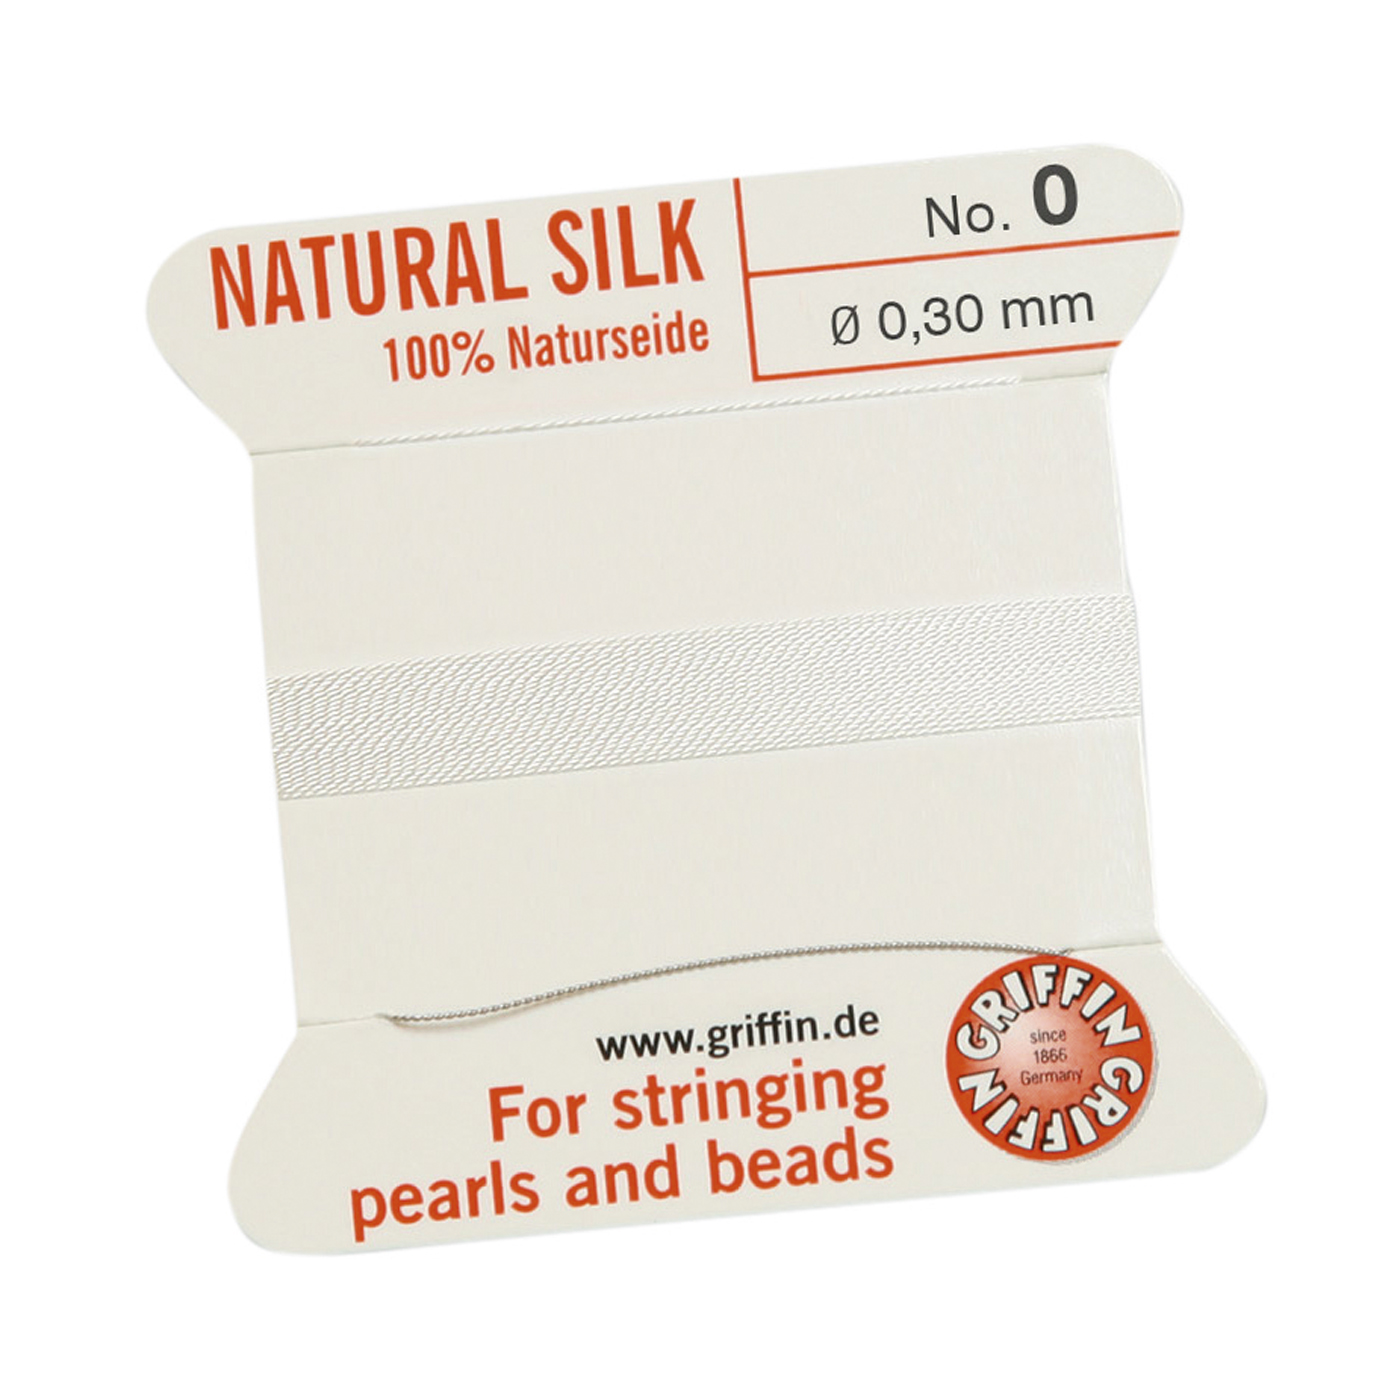 Bead Cord 100% Natural Silk, White, No. 0 - 2 m